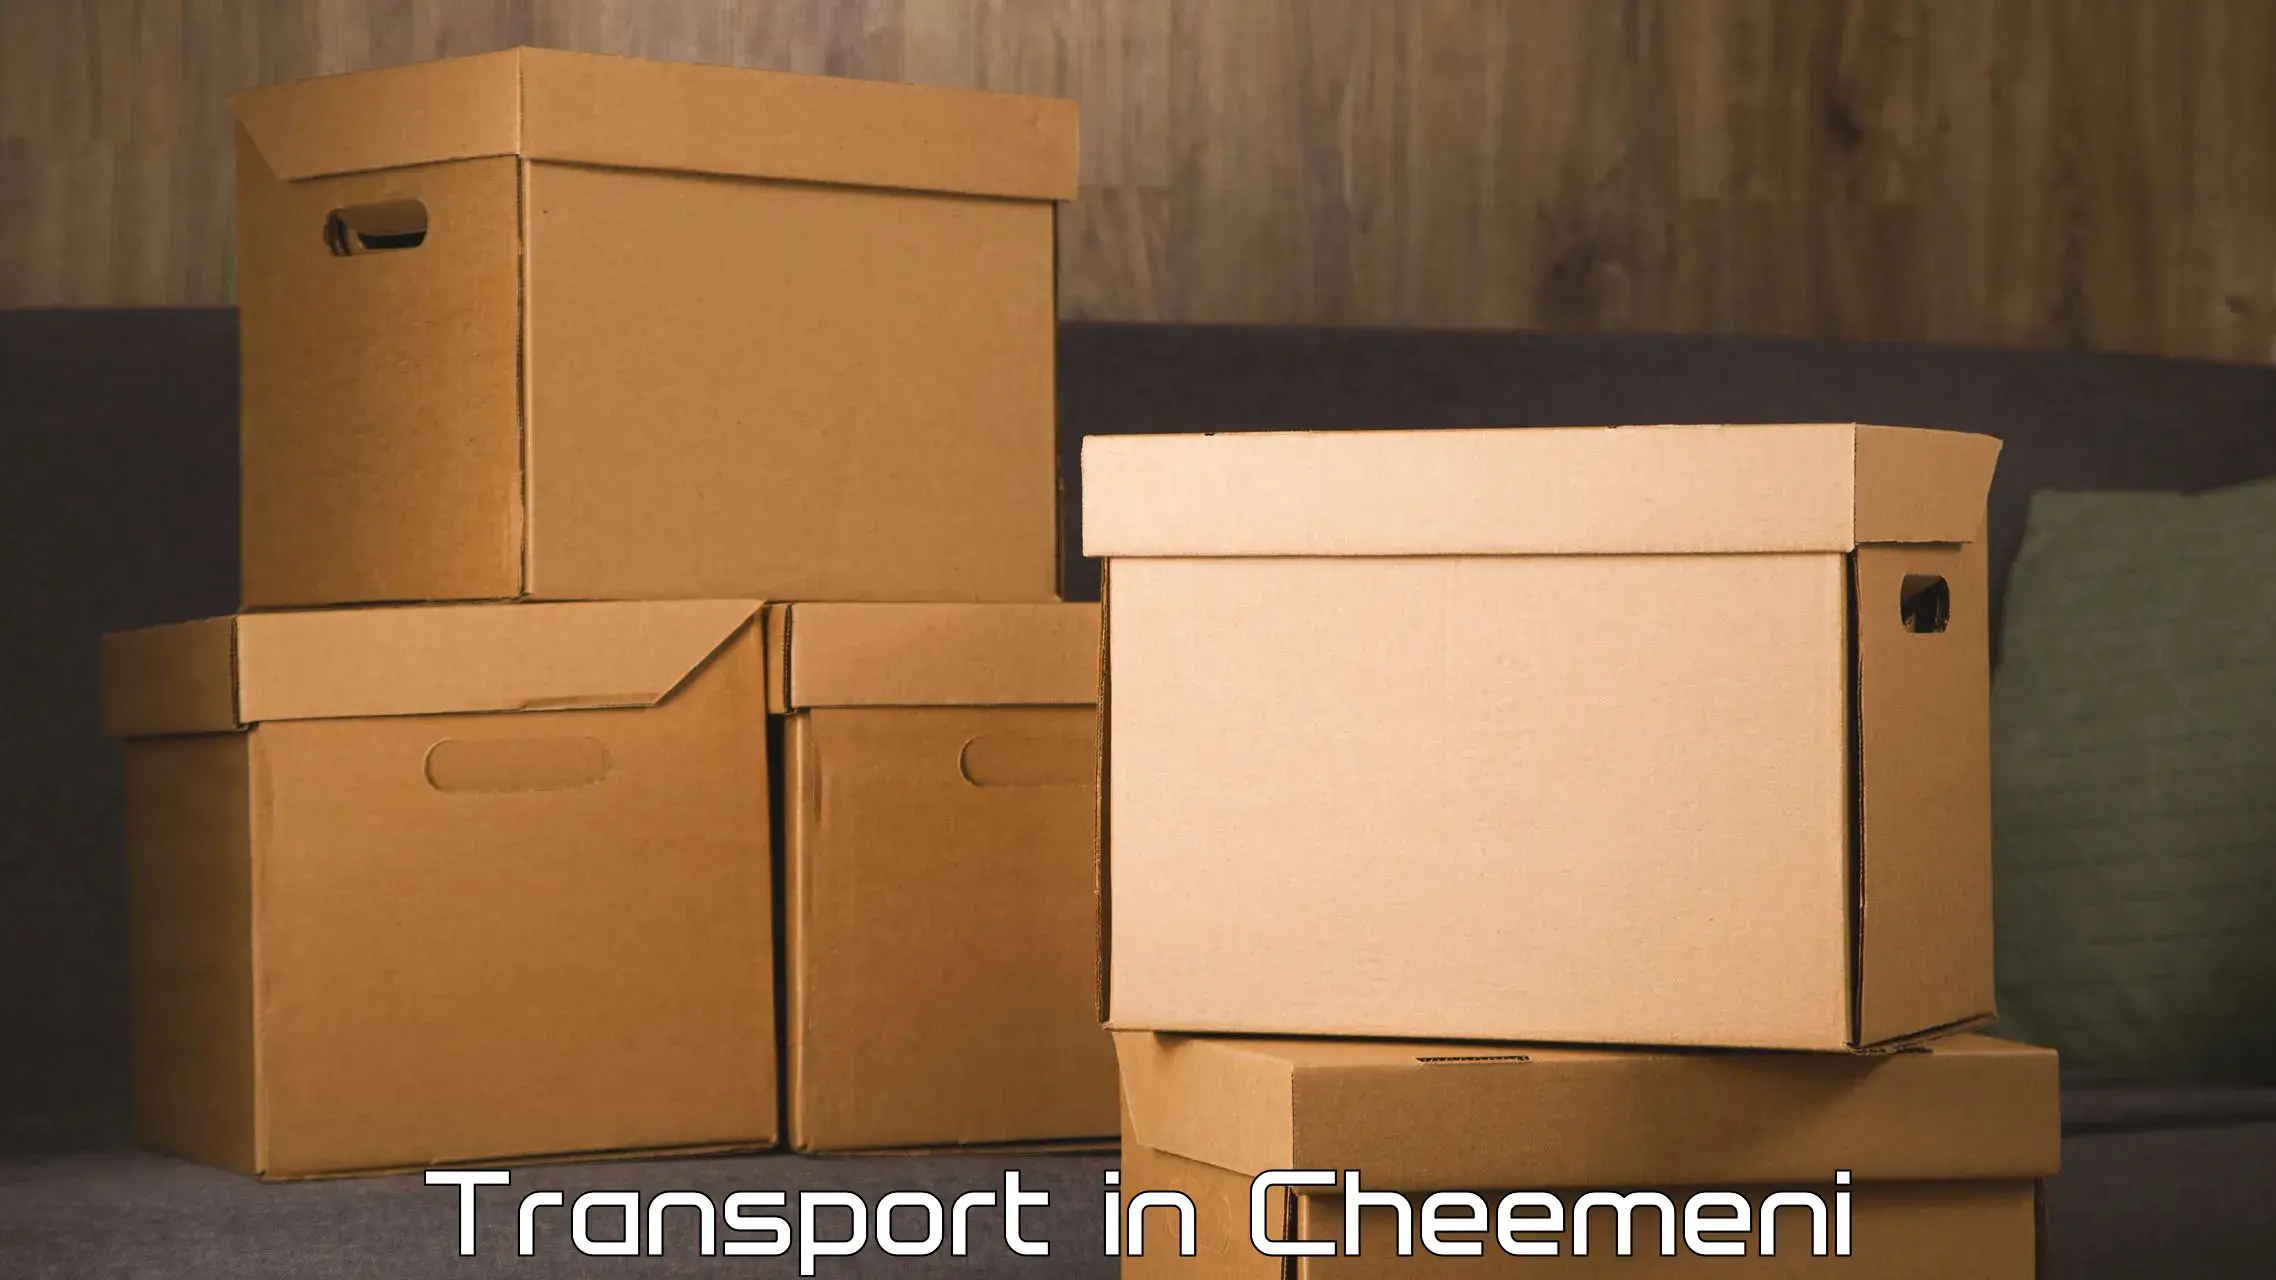 Transport in sharing in Cheemeni